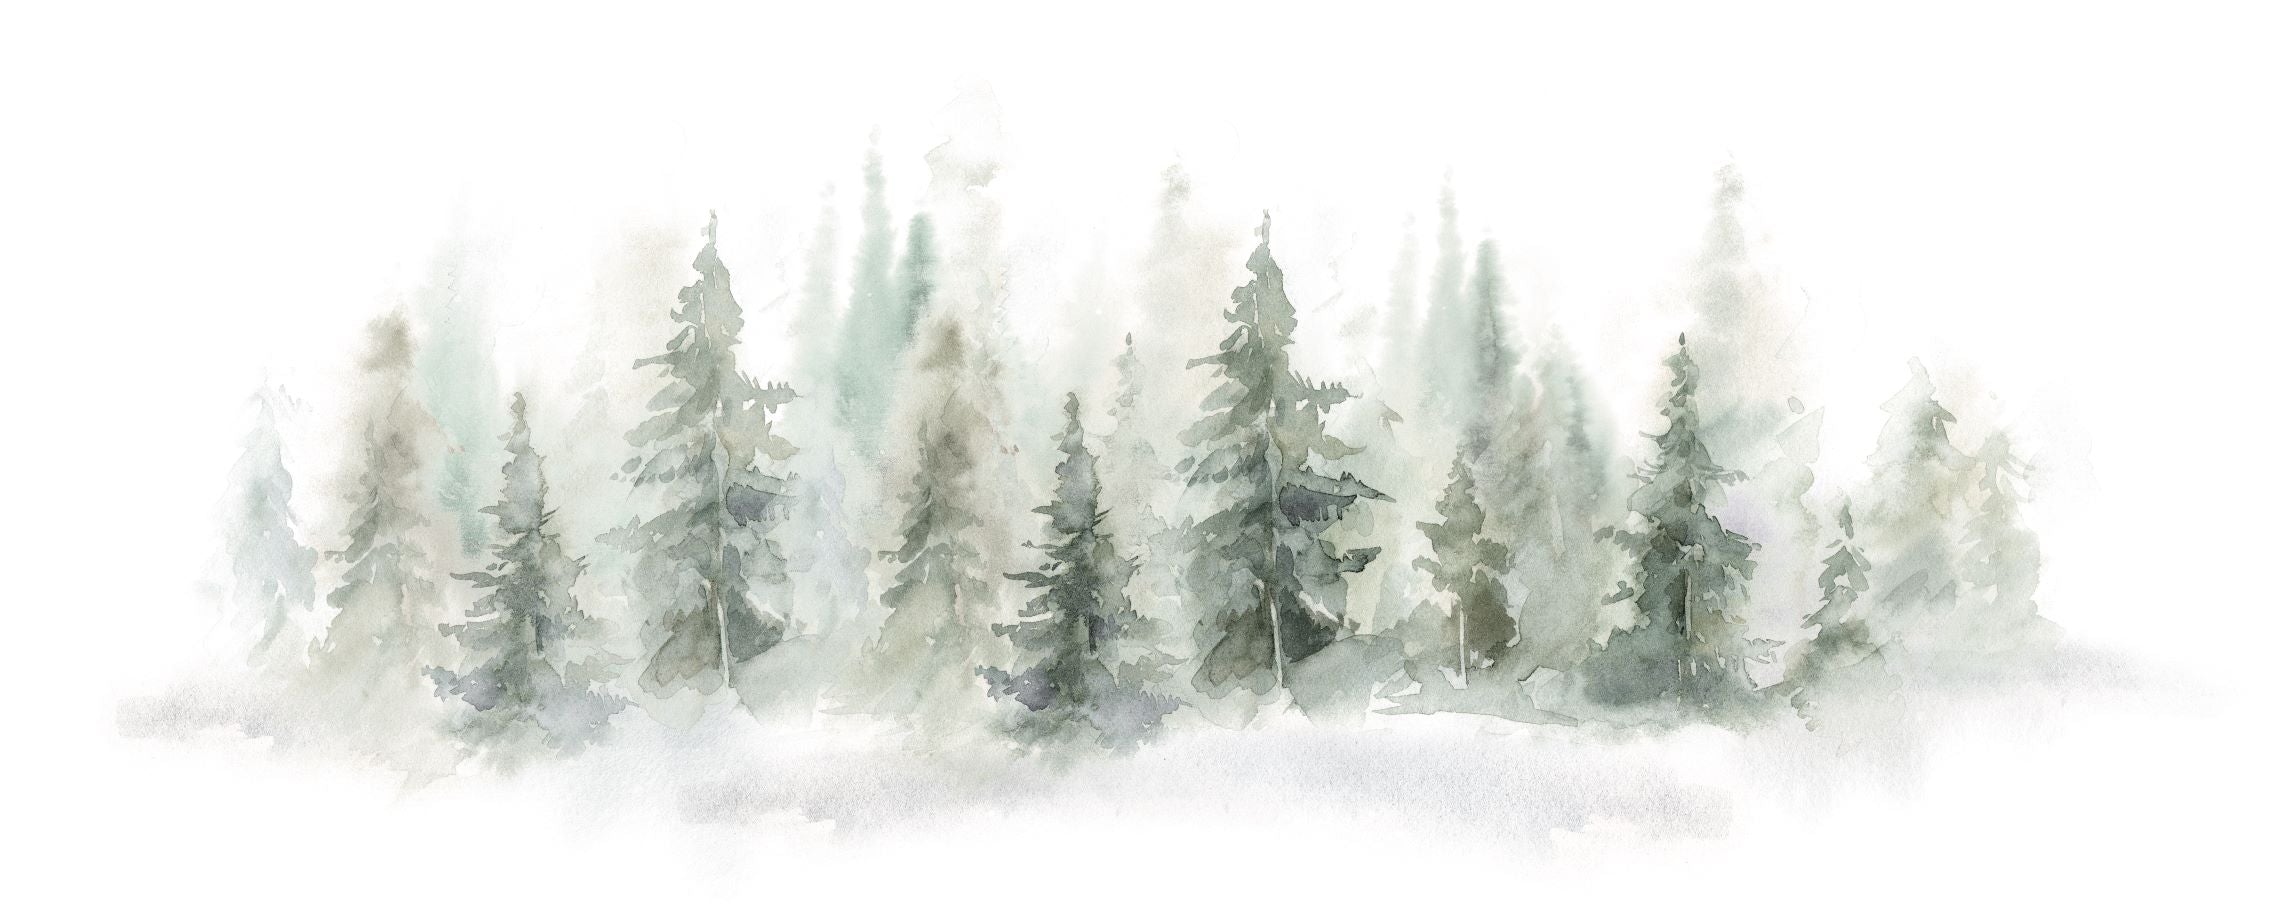 Watercolor Pines